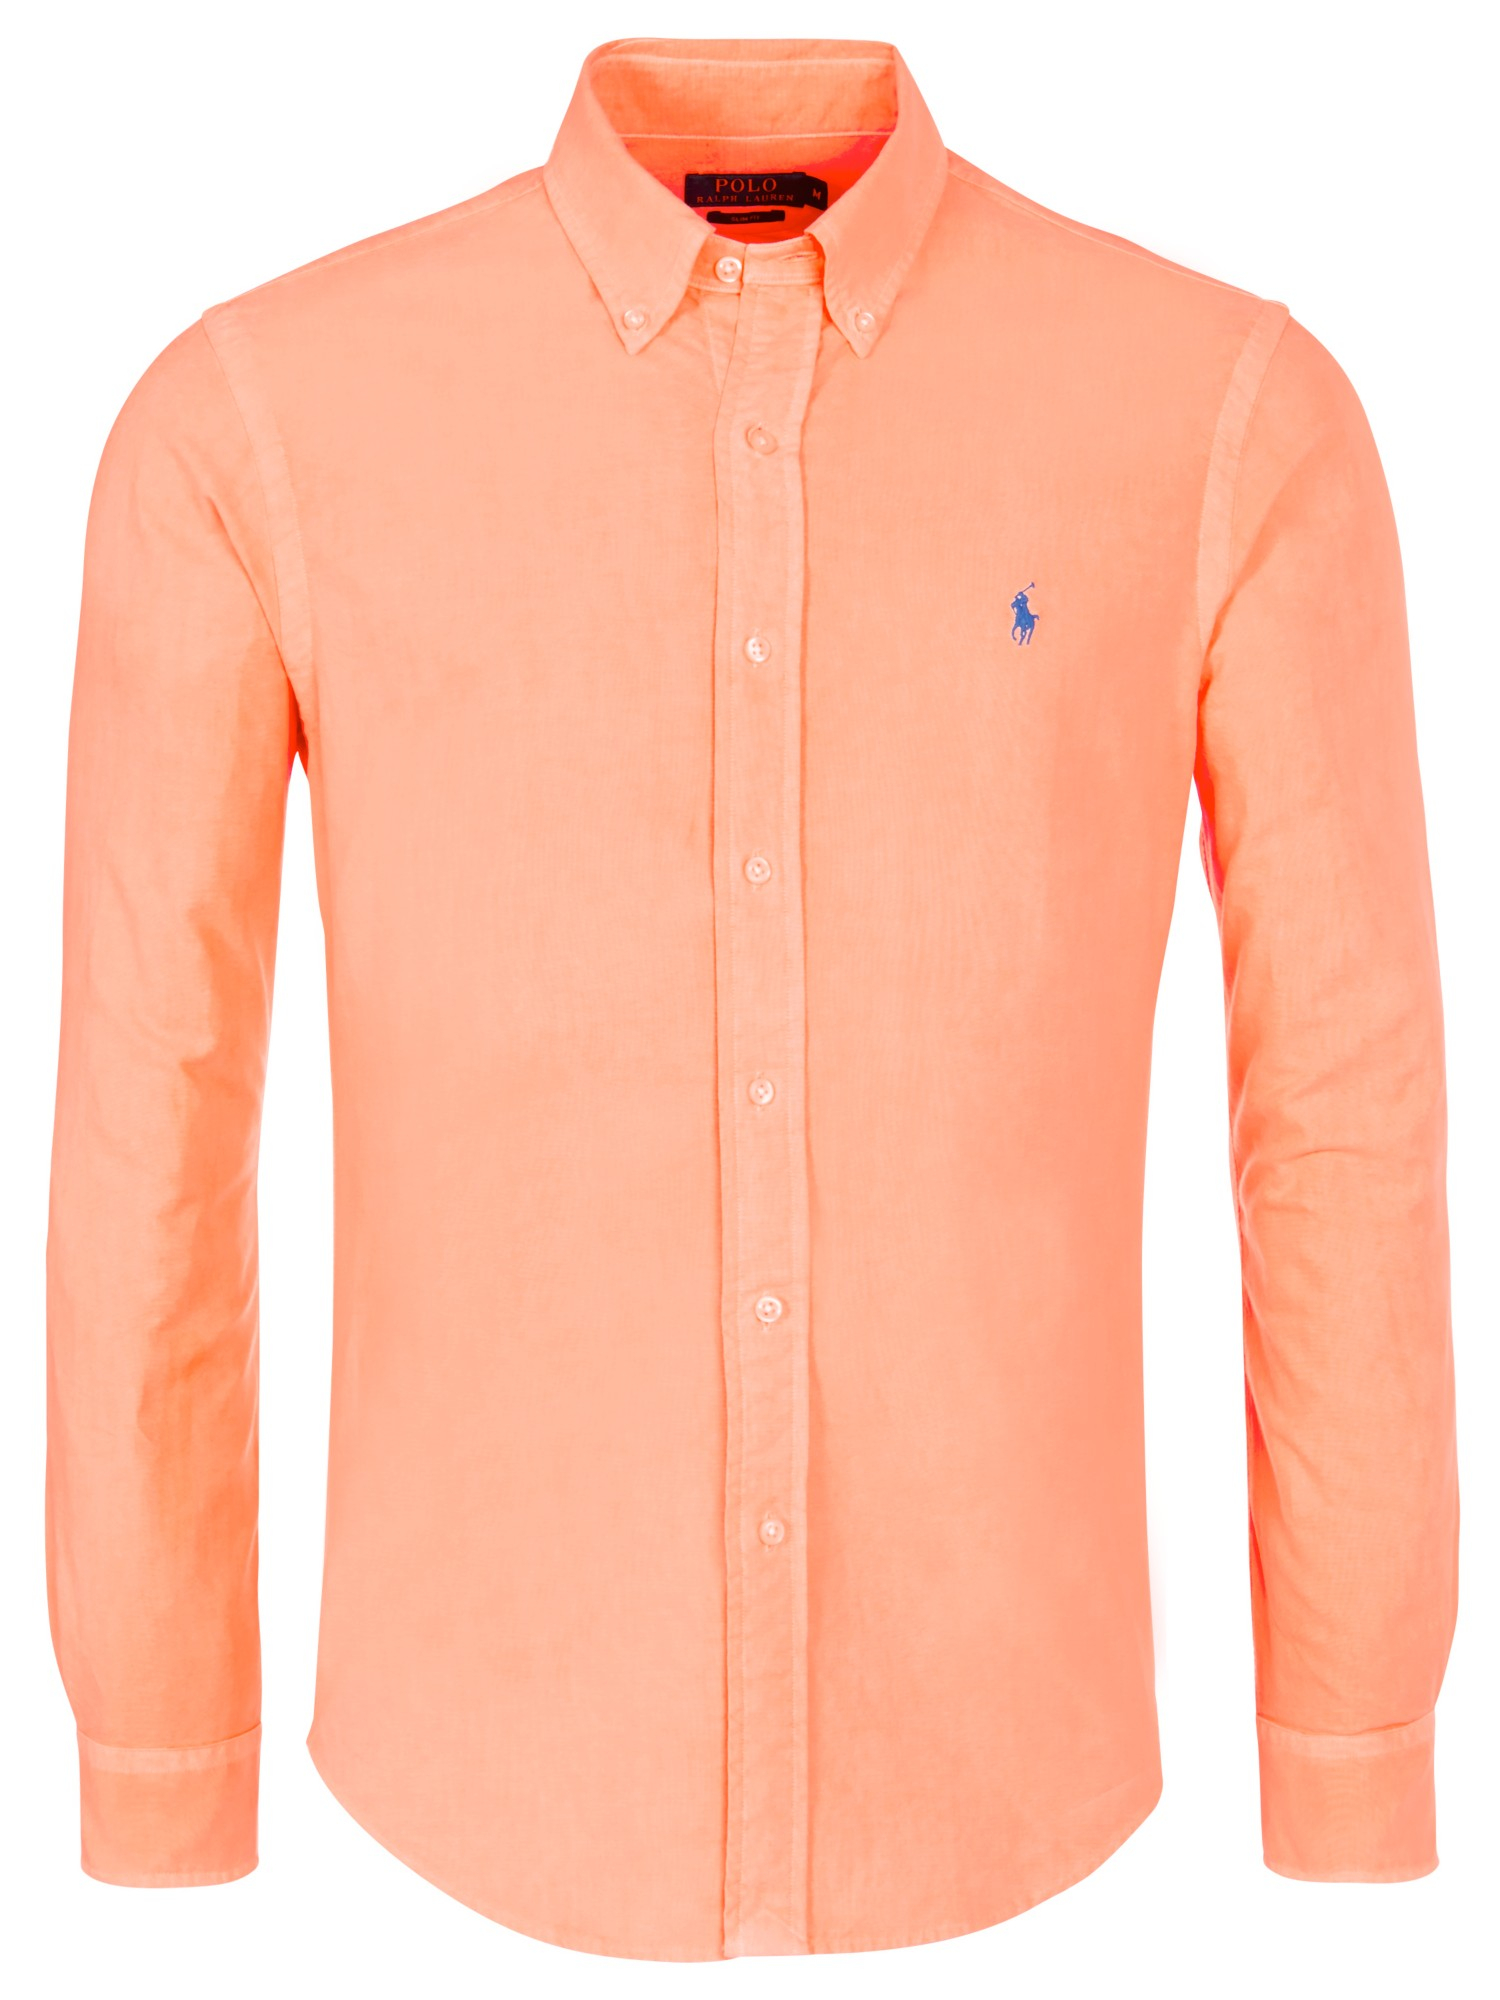 Polo Ralph Lauren Slim Fit Oxford Shirt in Orange for Men - Lyst